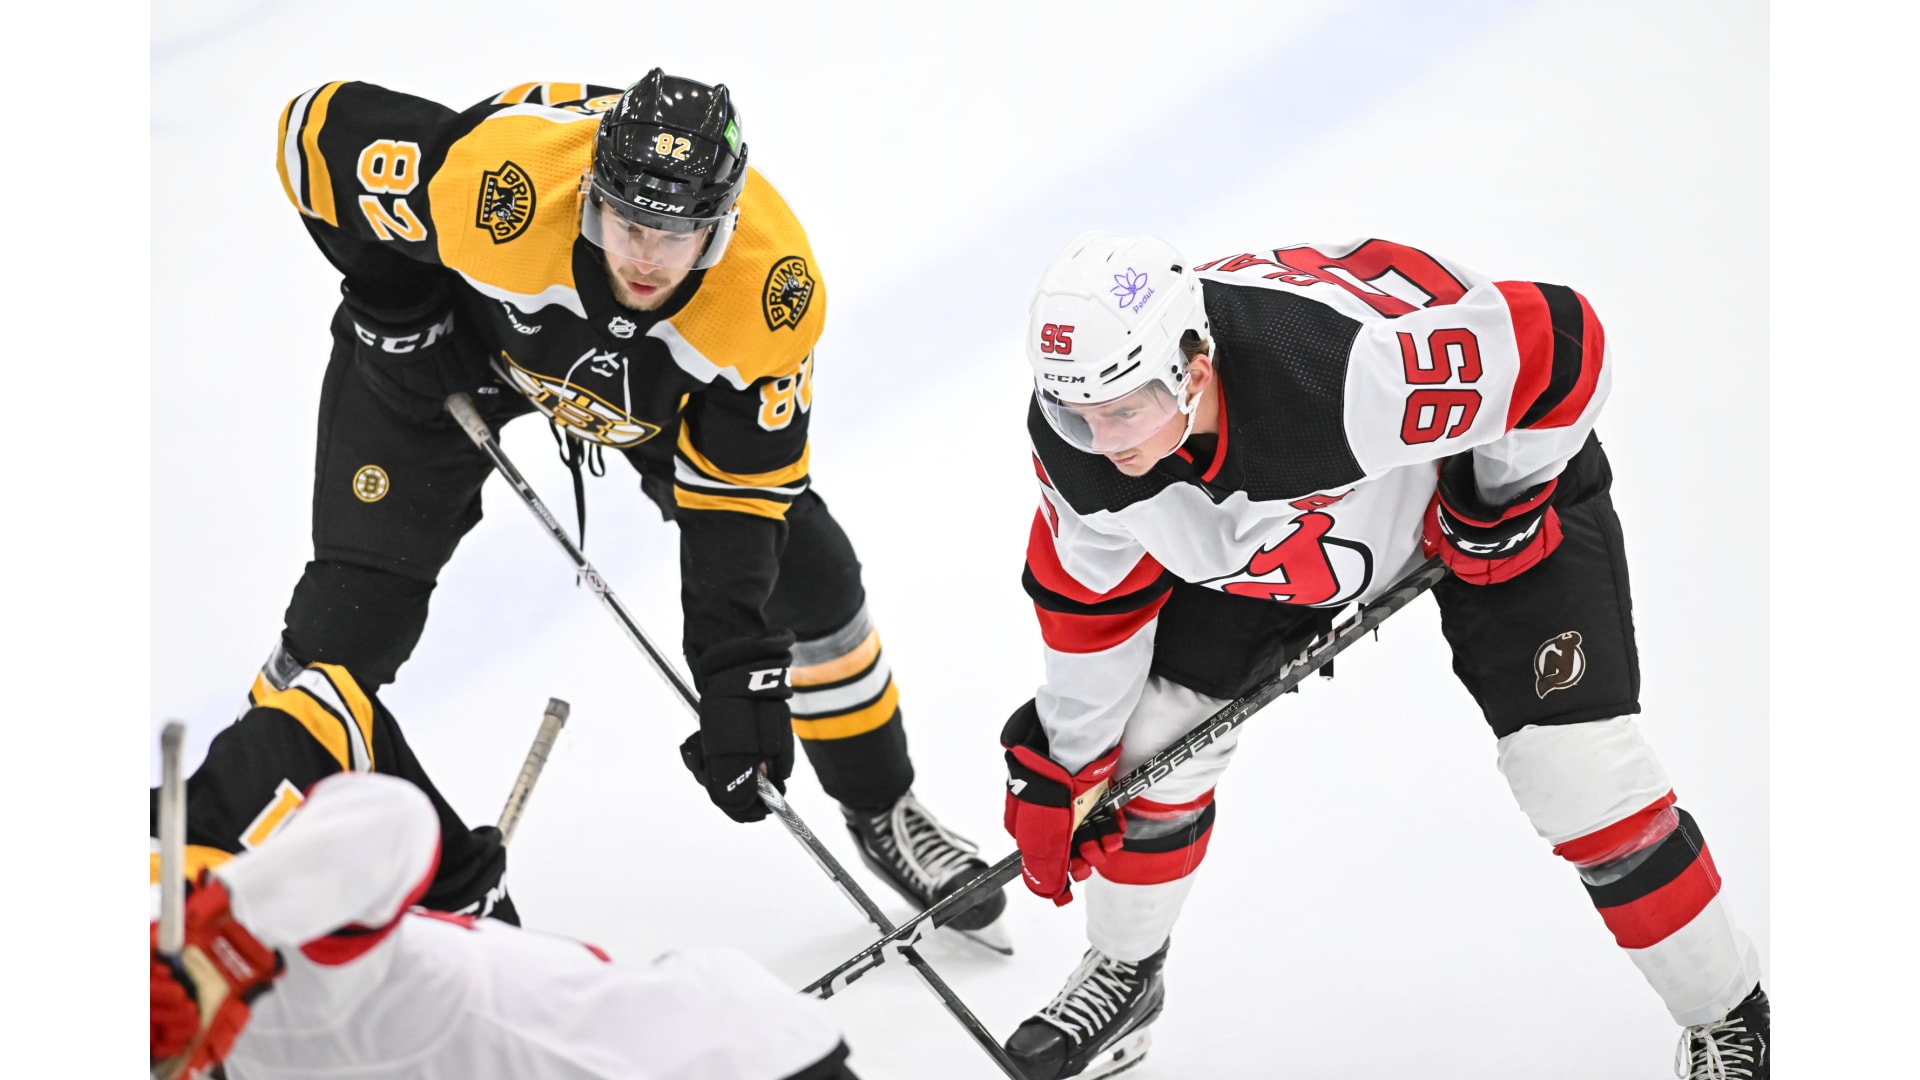 New Jersey Devils vs. Boston Bruins Hockey